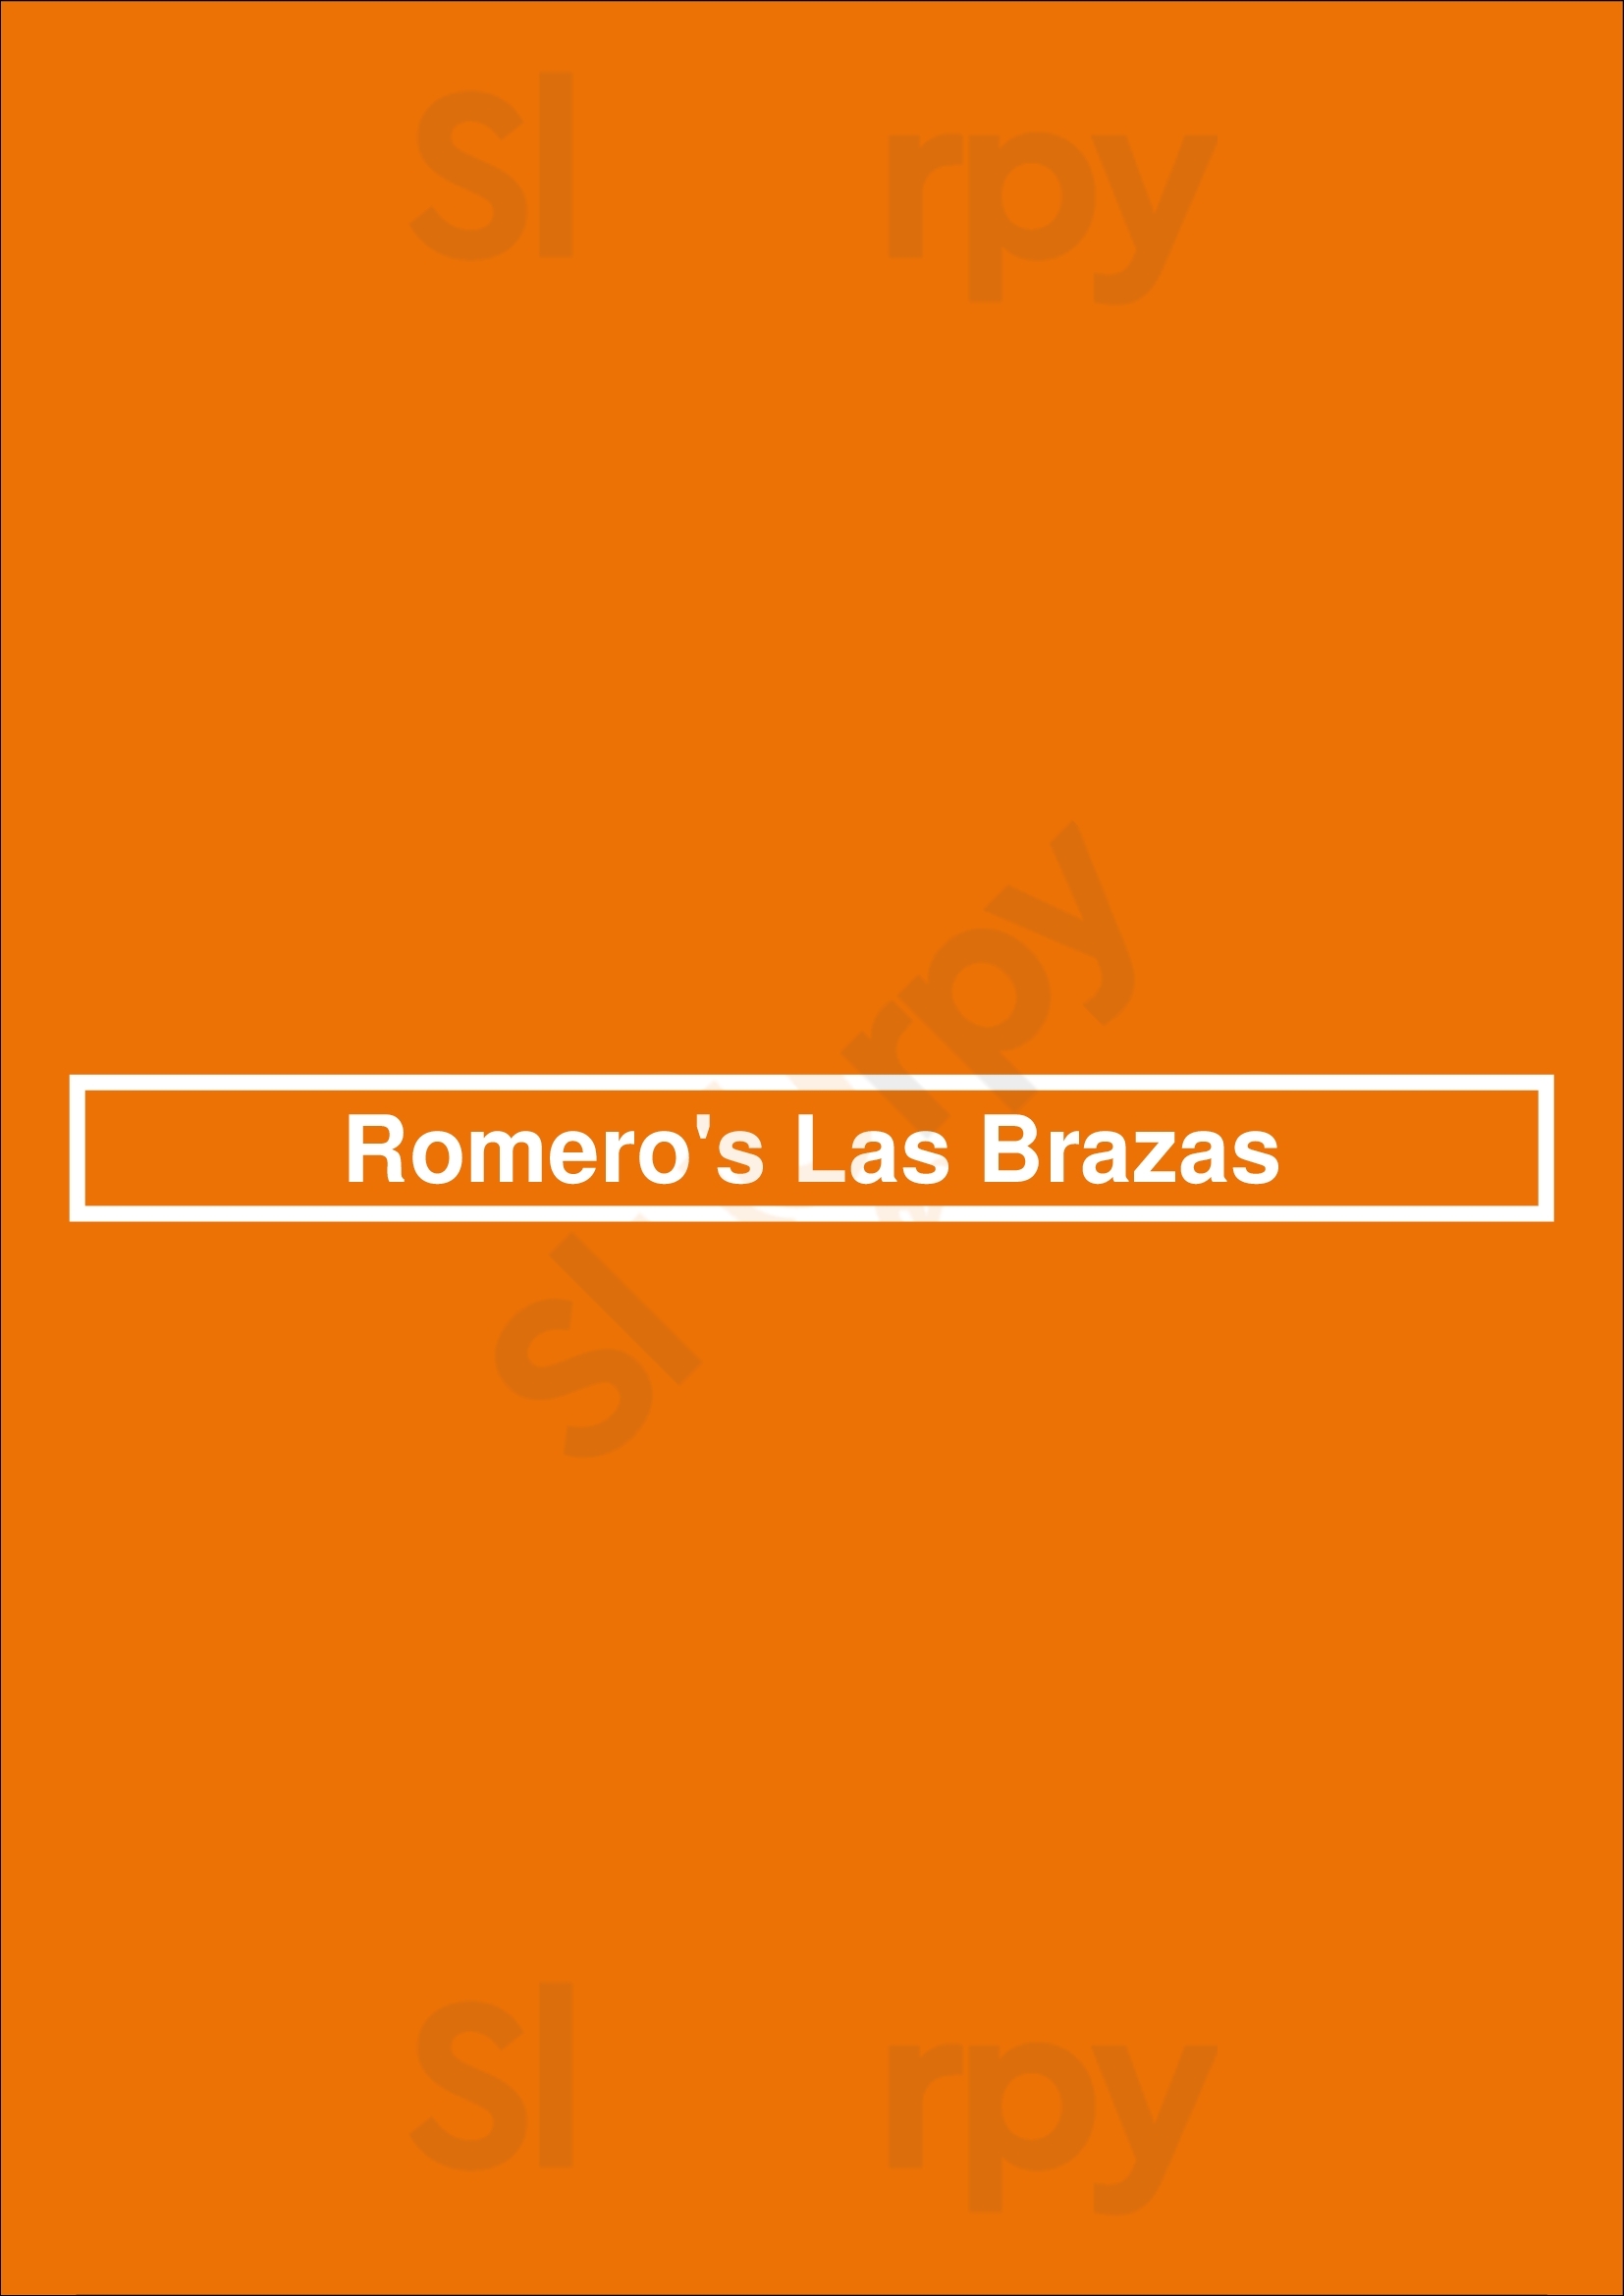 Romero's Las Brazas Cypress Menu - 1